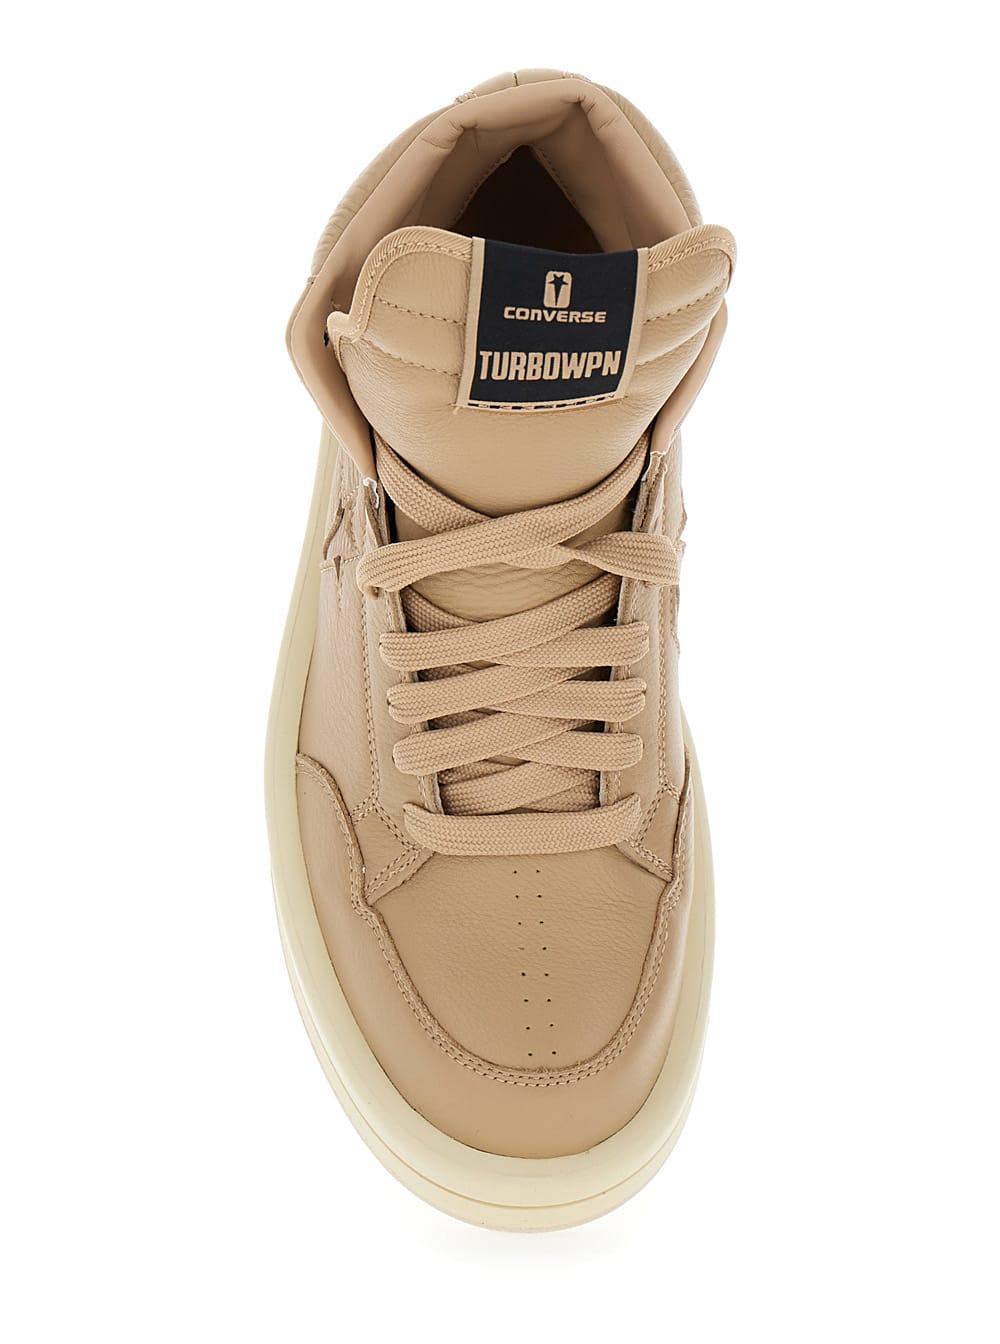 Shop Drkshdw Converse - Turbowpn Beige Sneakers High Top In Leather Man